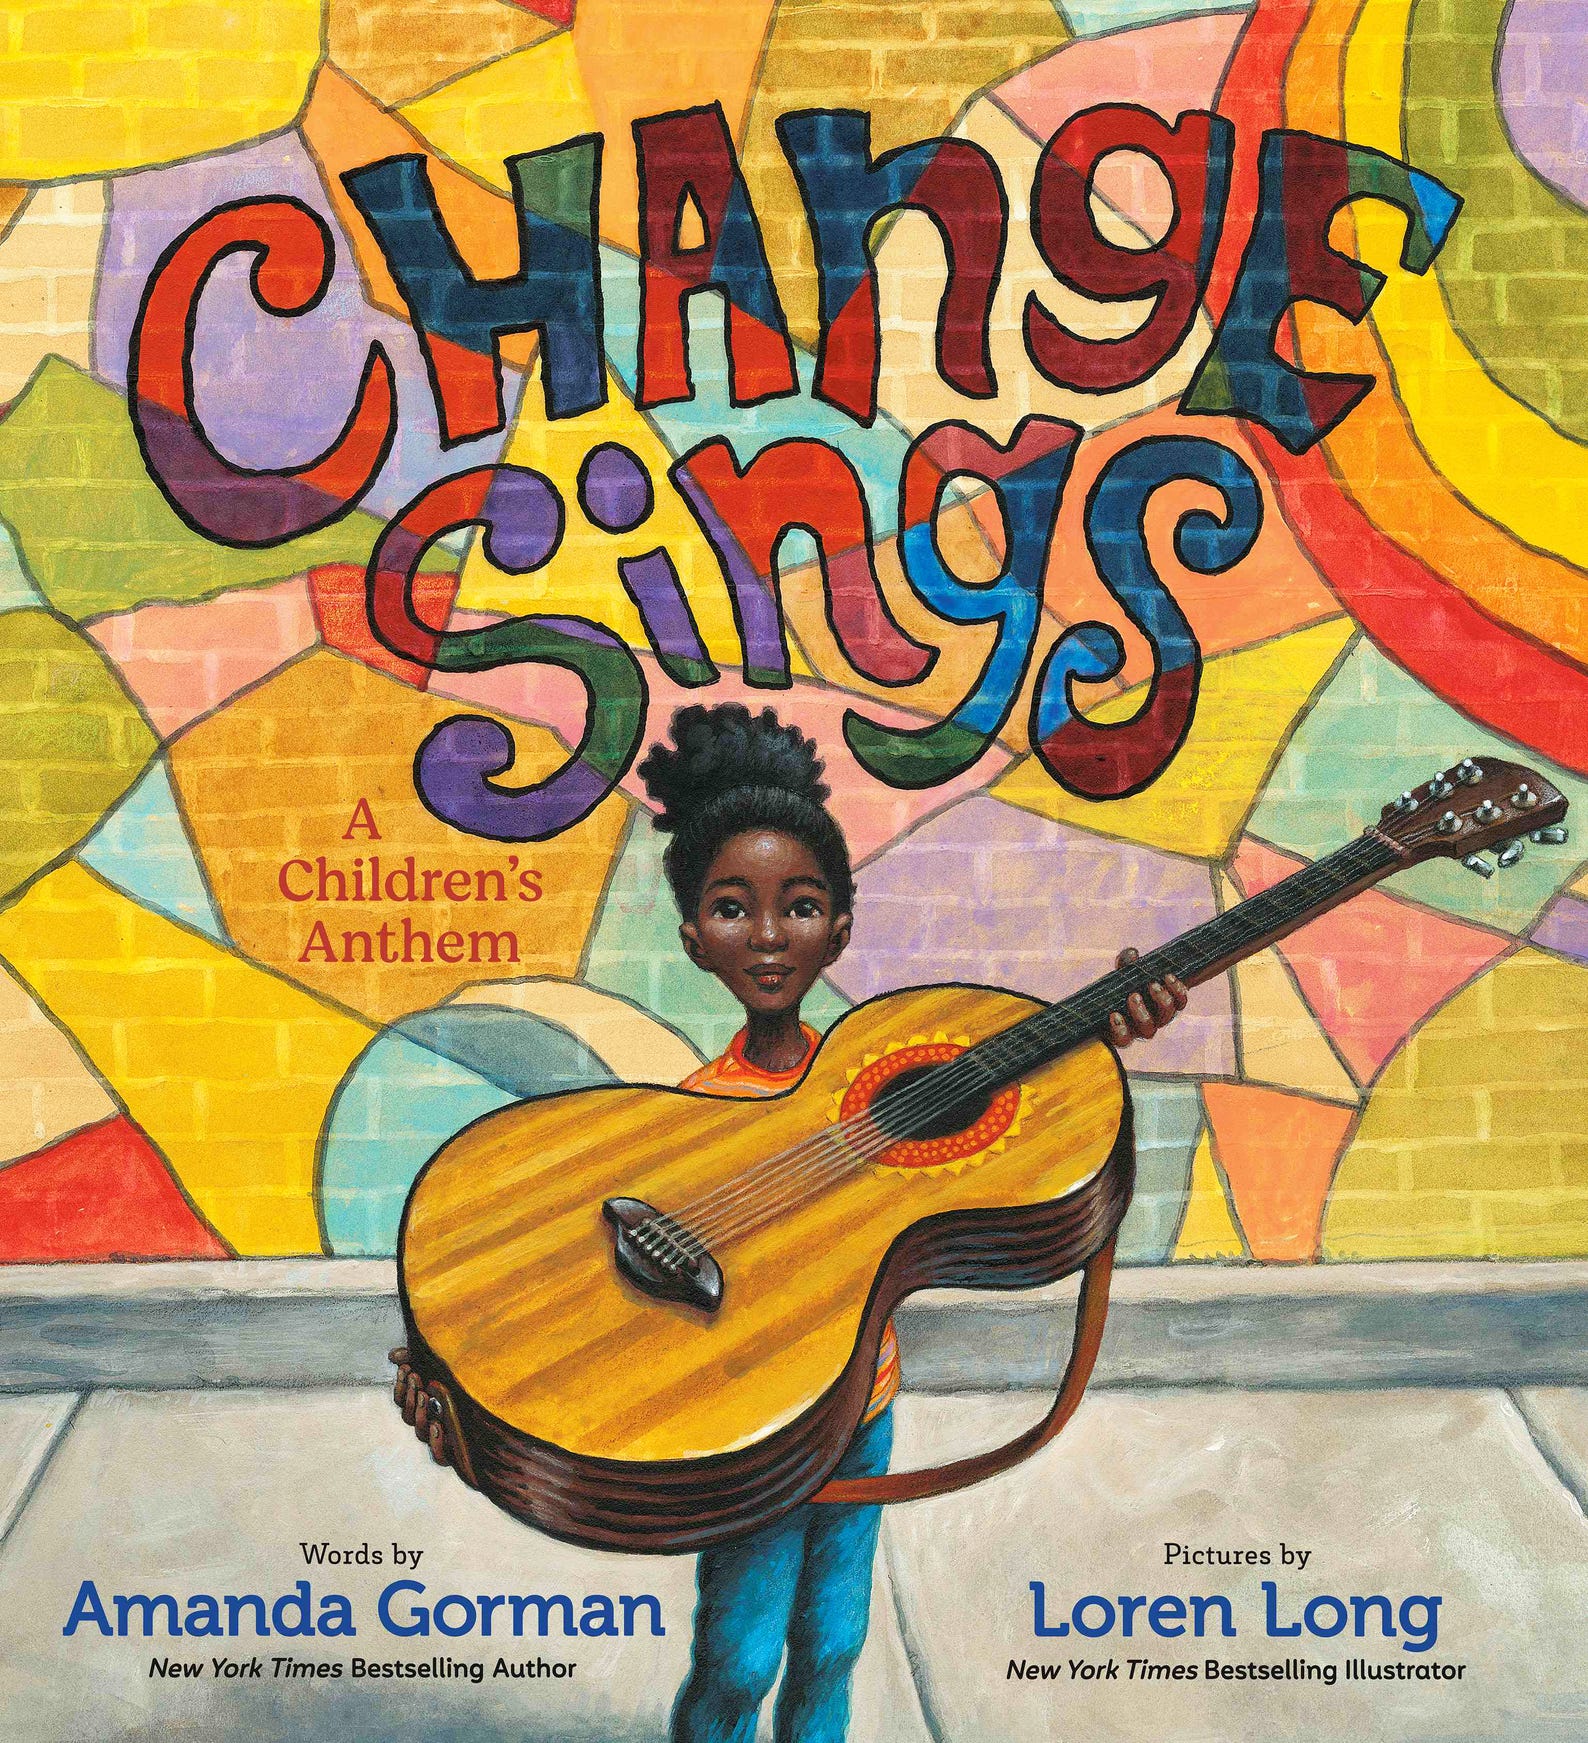 “Change Sings: A Children’s Anthem” by Amanda Gorman, pictures by Loren Long.